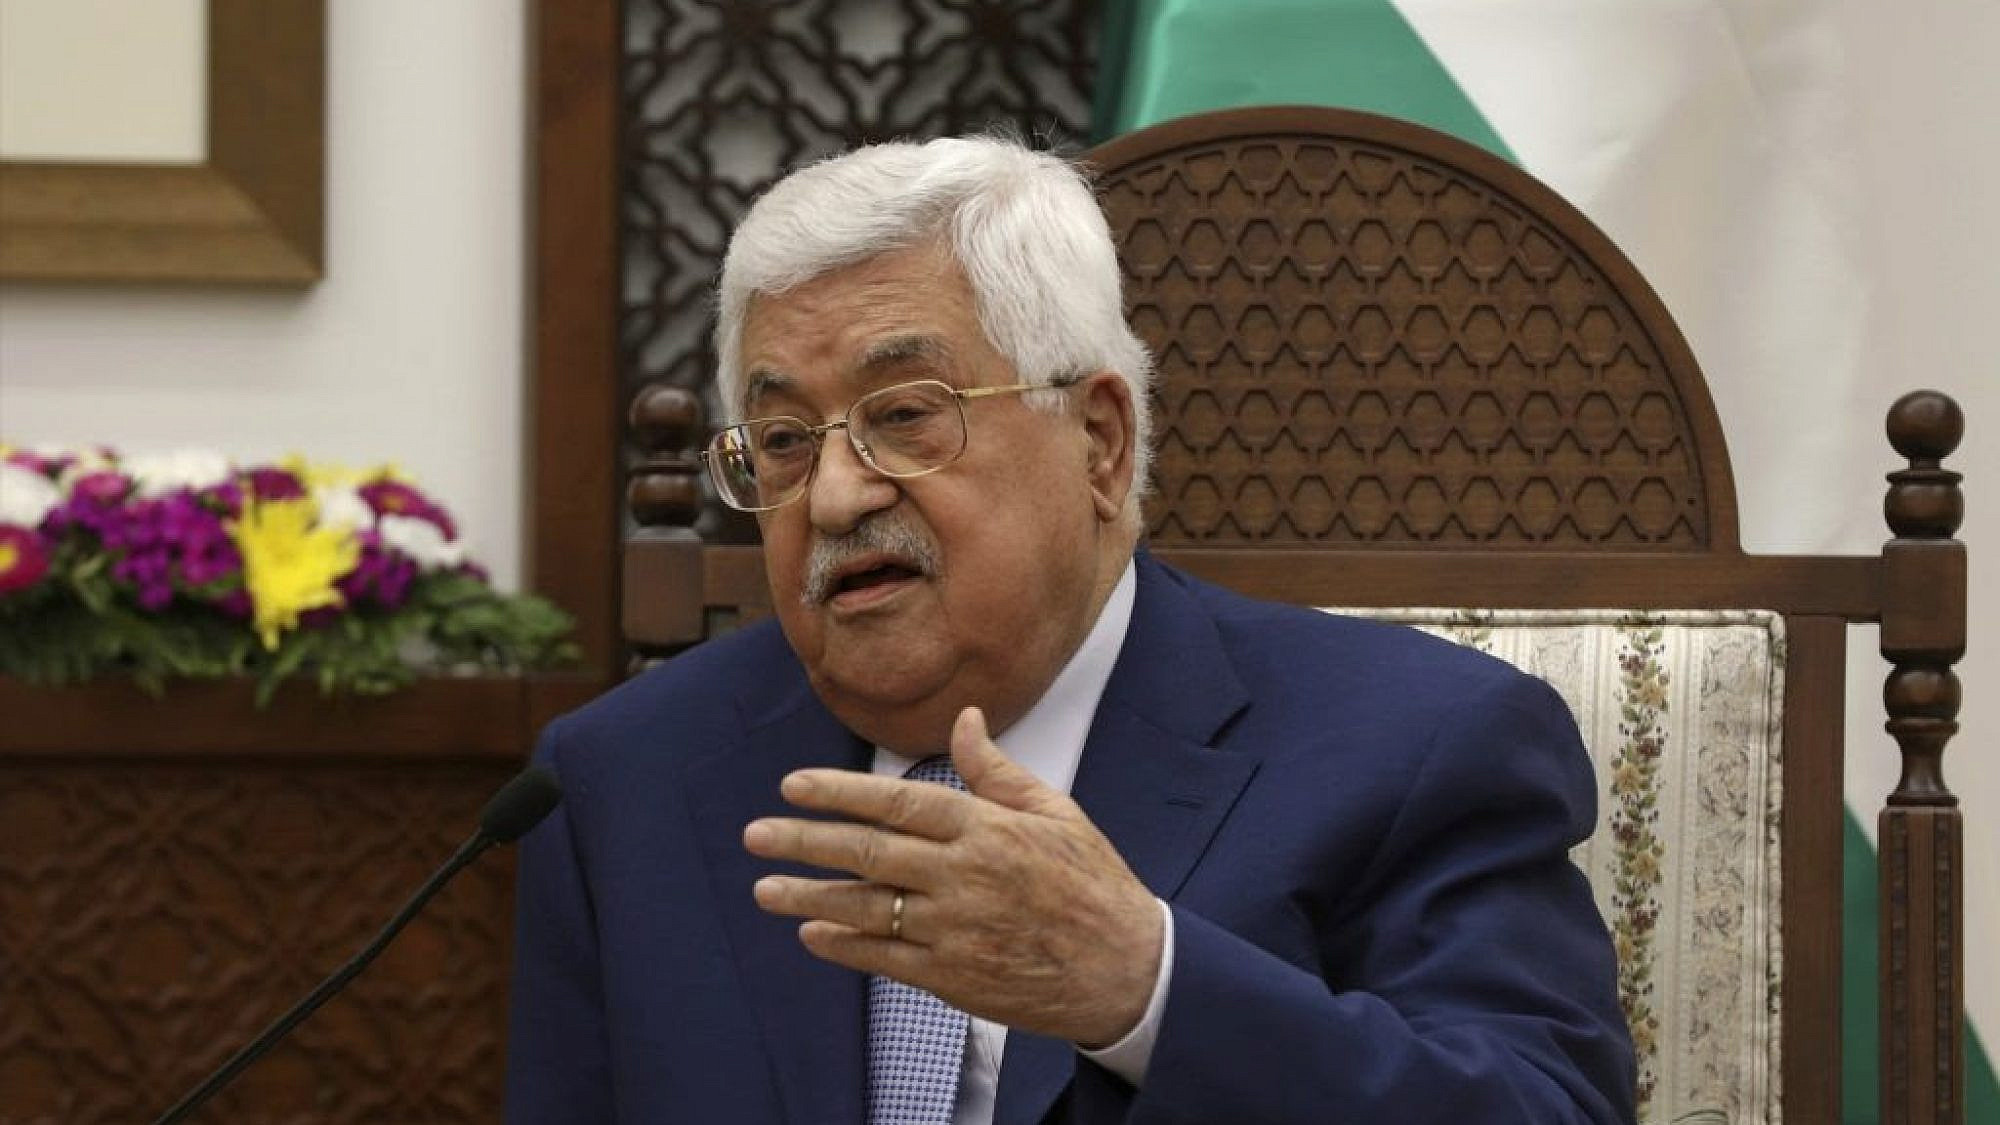 Palestinian Authority leader Mahmoud Abbas in the West Bank city of Ramallah on June 27, 2018. Photo: Alaa Badarneh/AP.